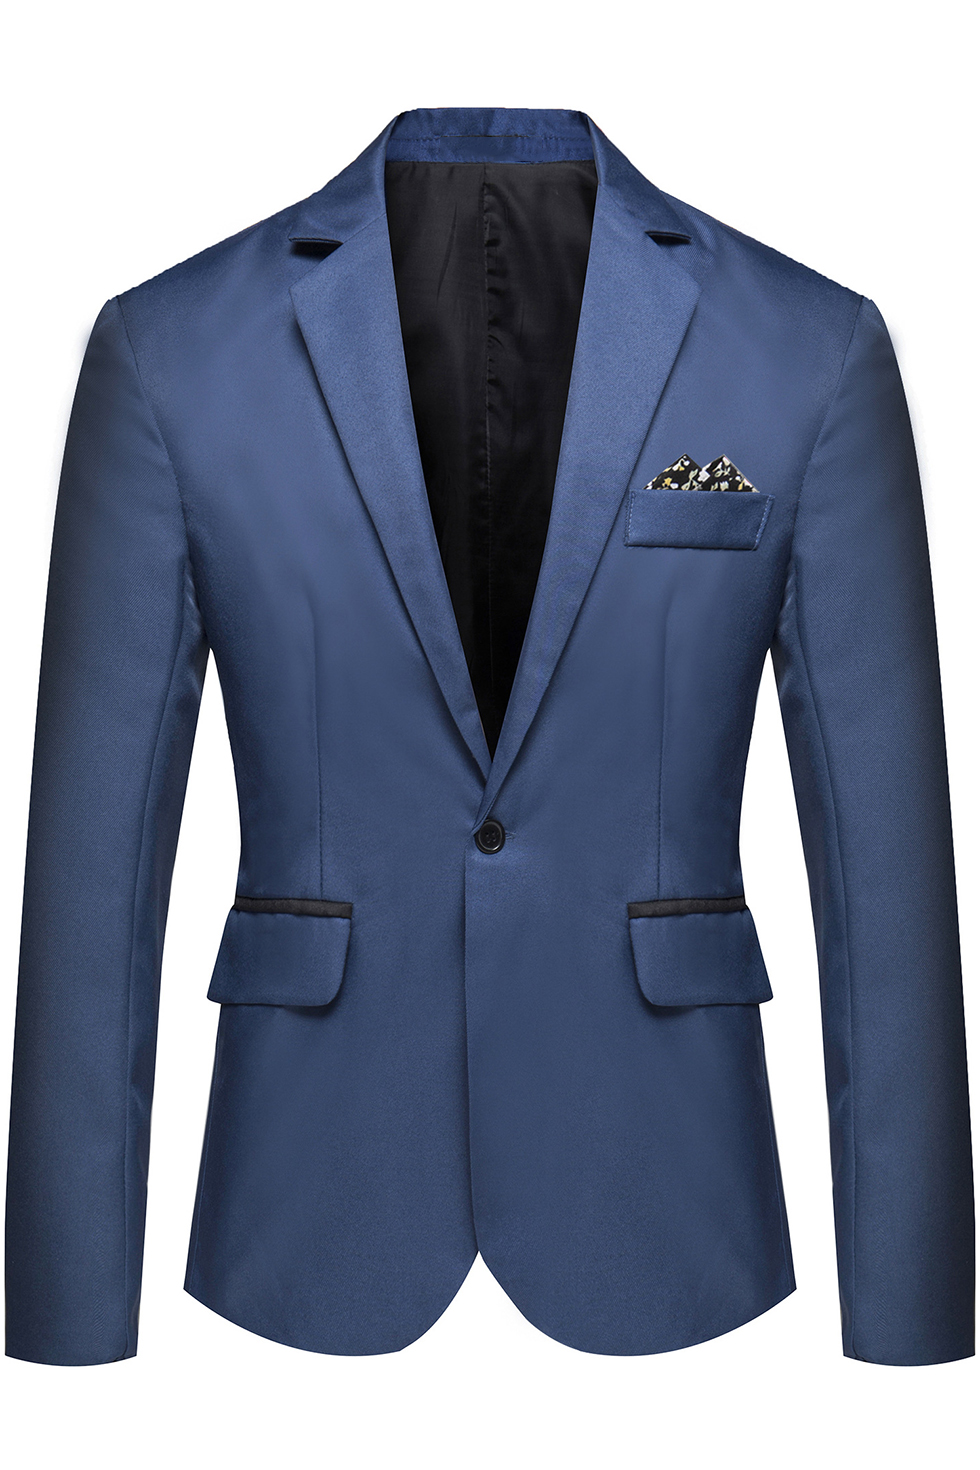 Winwinus Mens Solid Casual Notch Lapel Patch Stylish One Button Dress Suit 